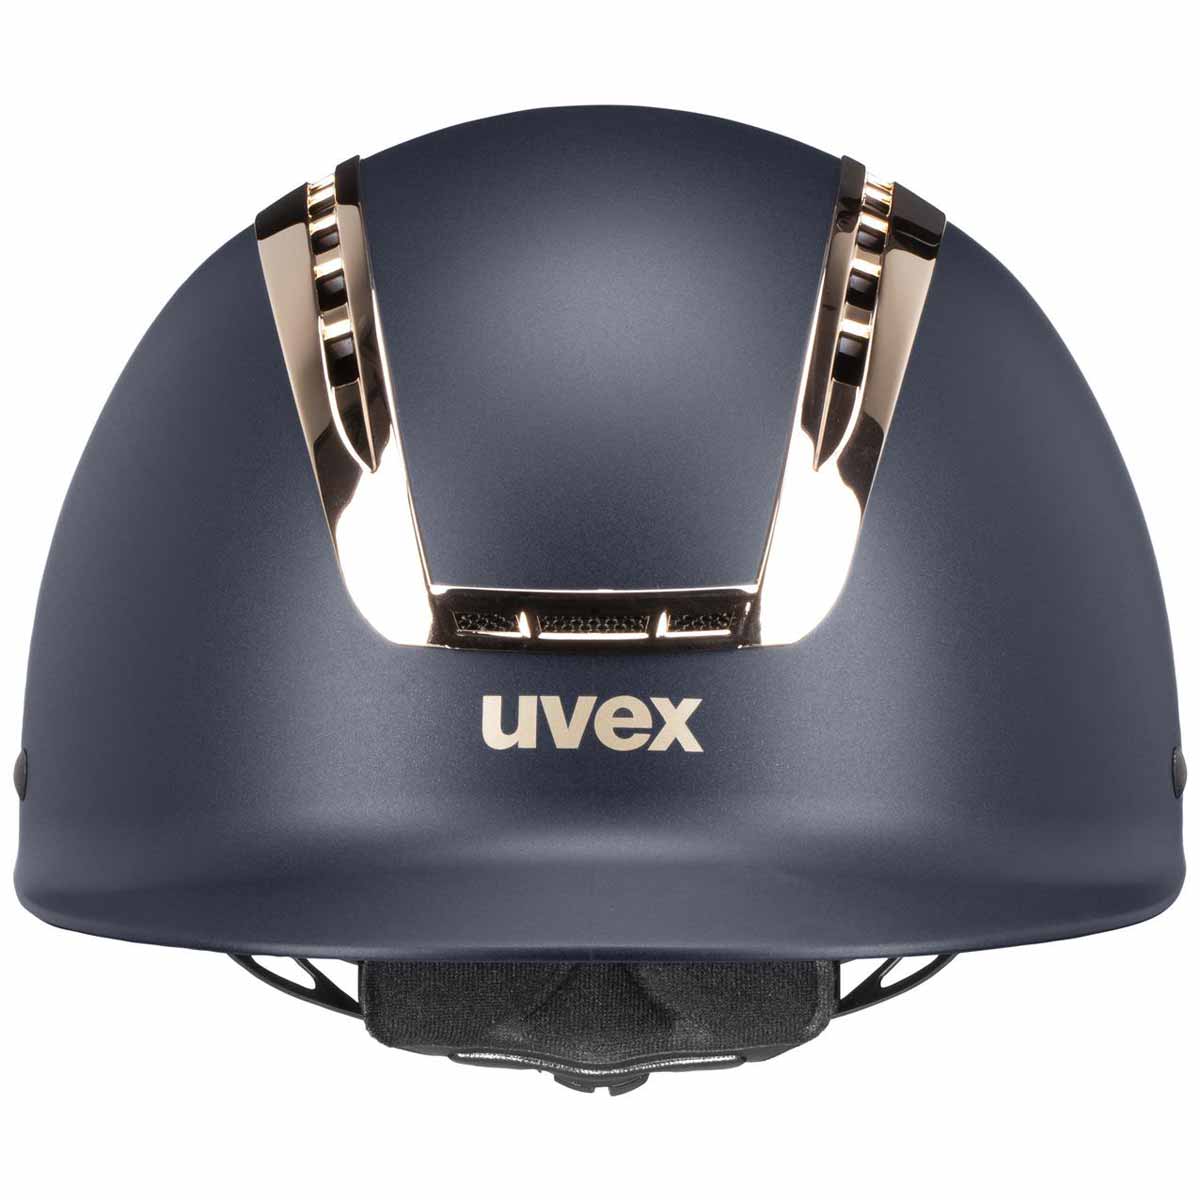 uvex suxxeed chrome riding helmet black mat- metal M/L